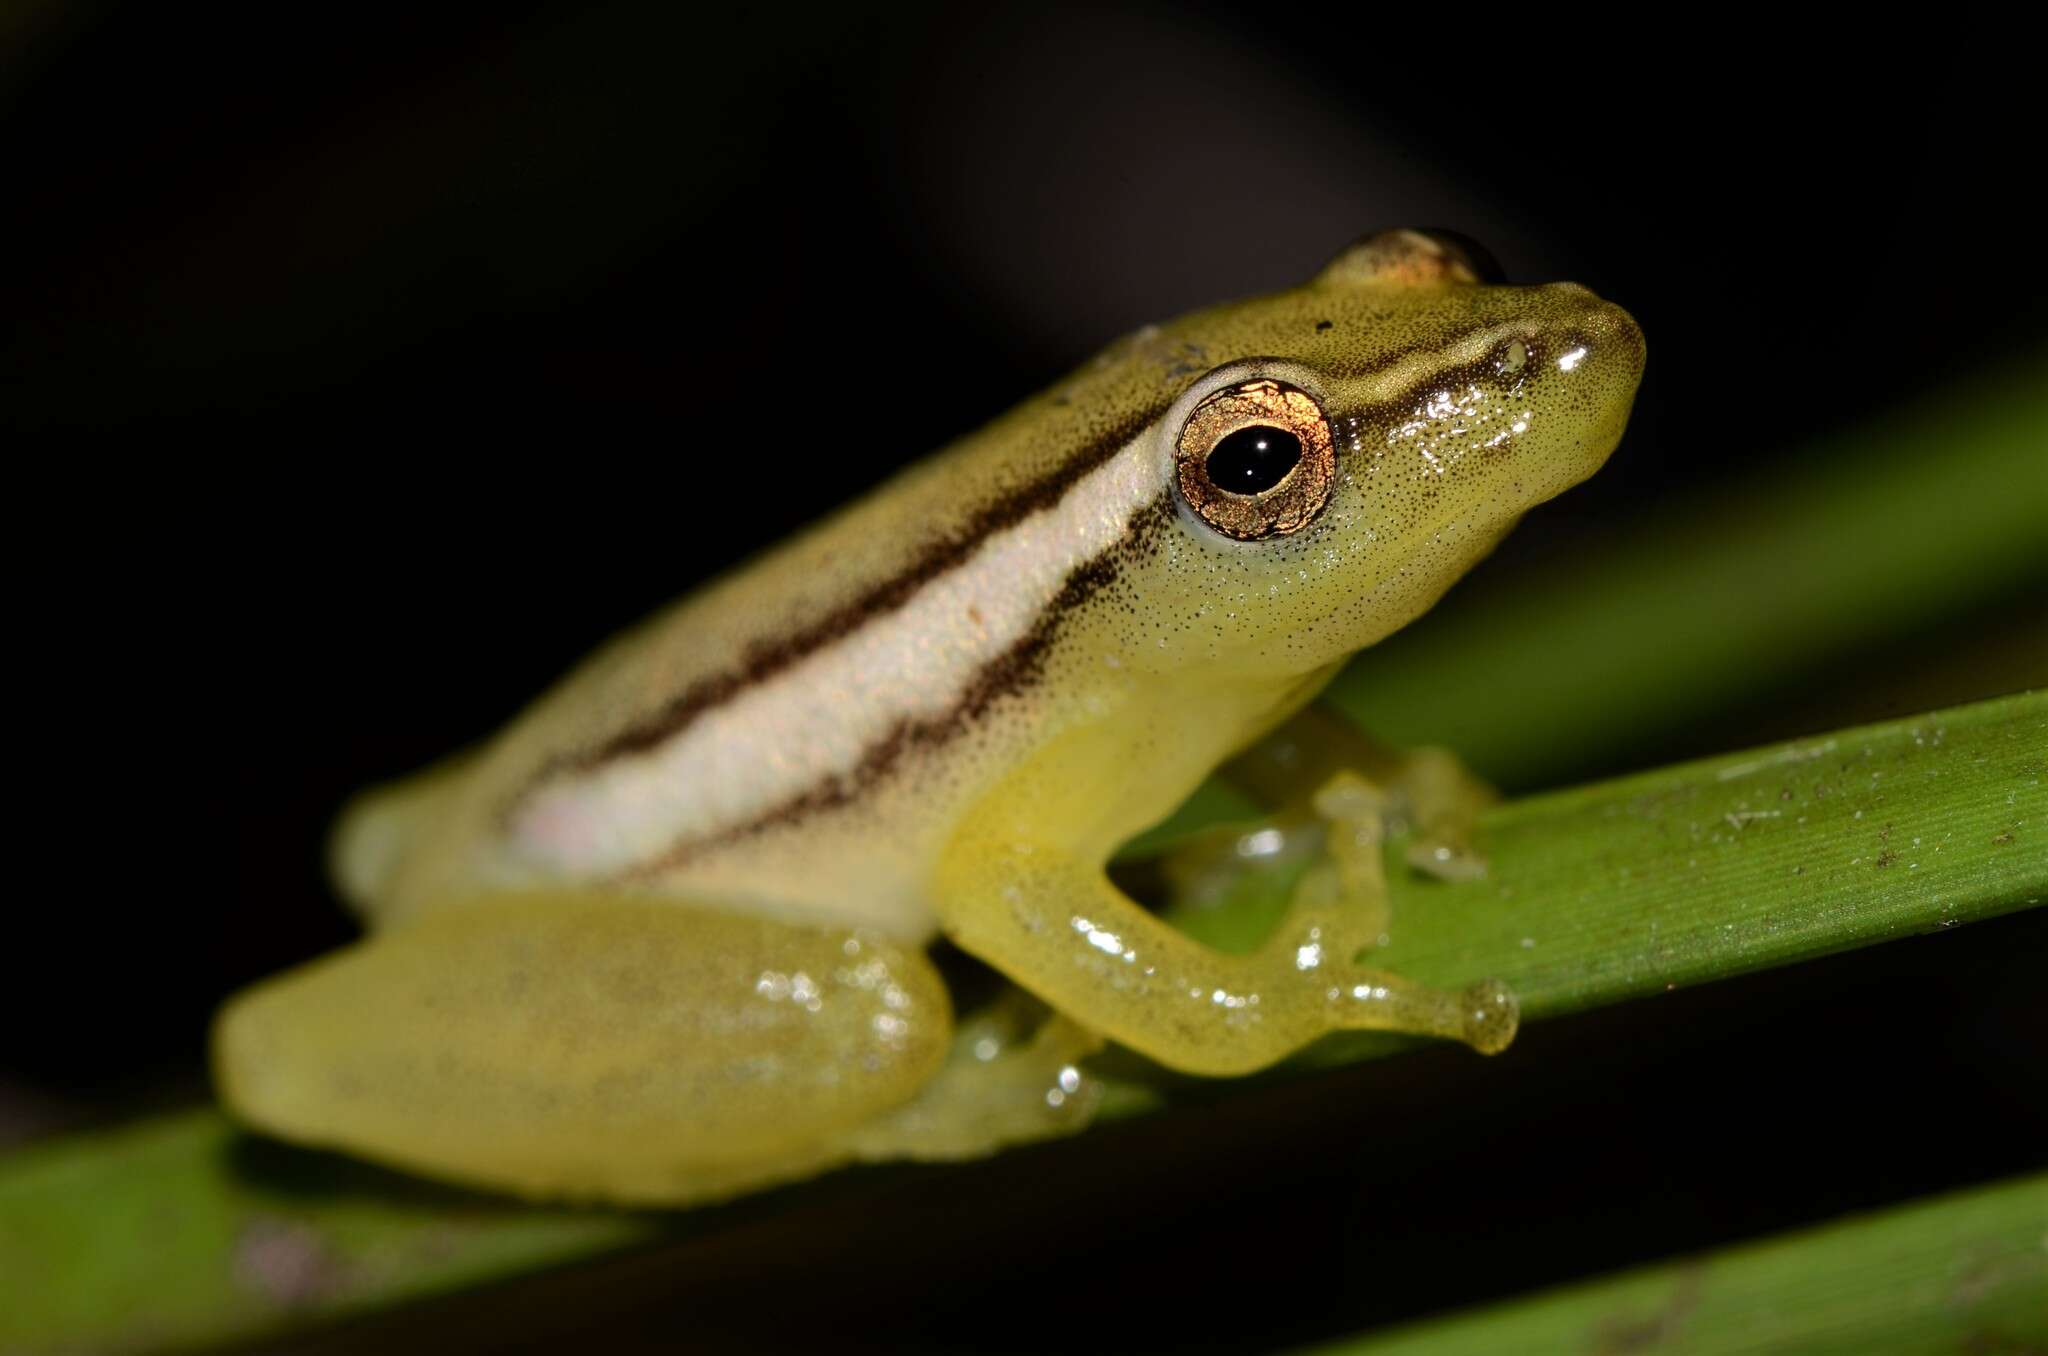 Image of Parker's Reed Frog